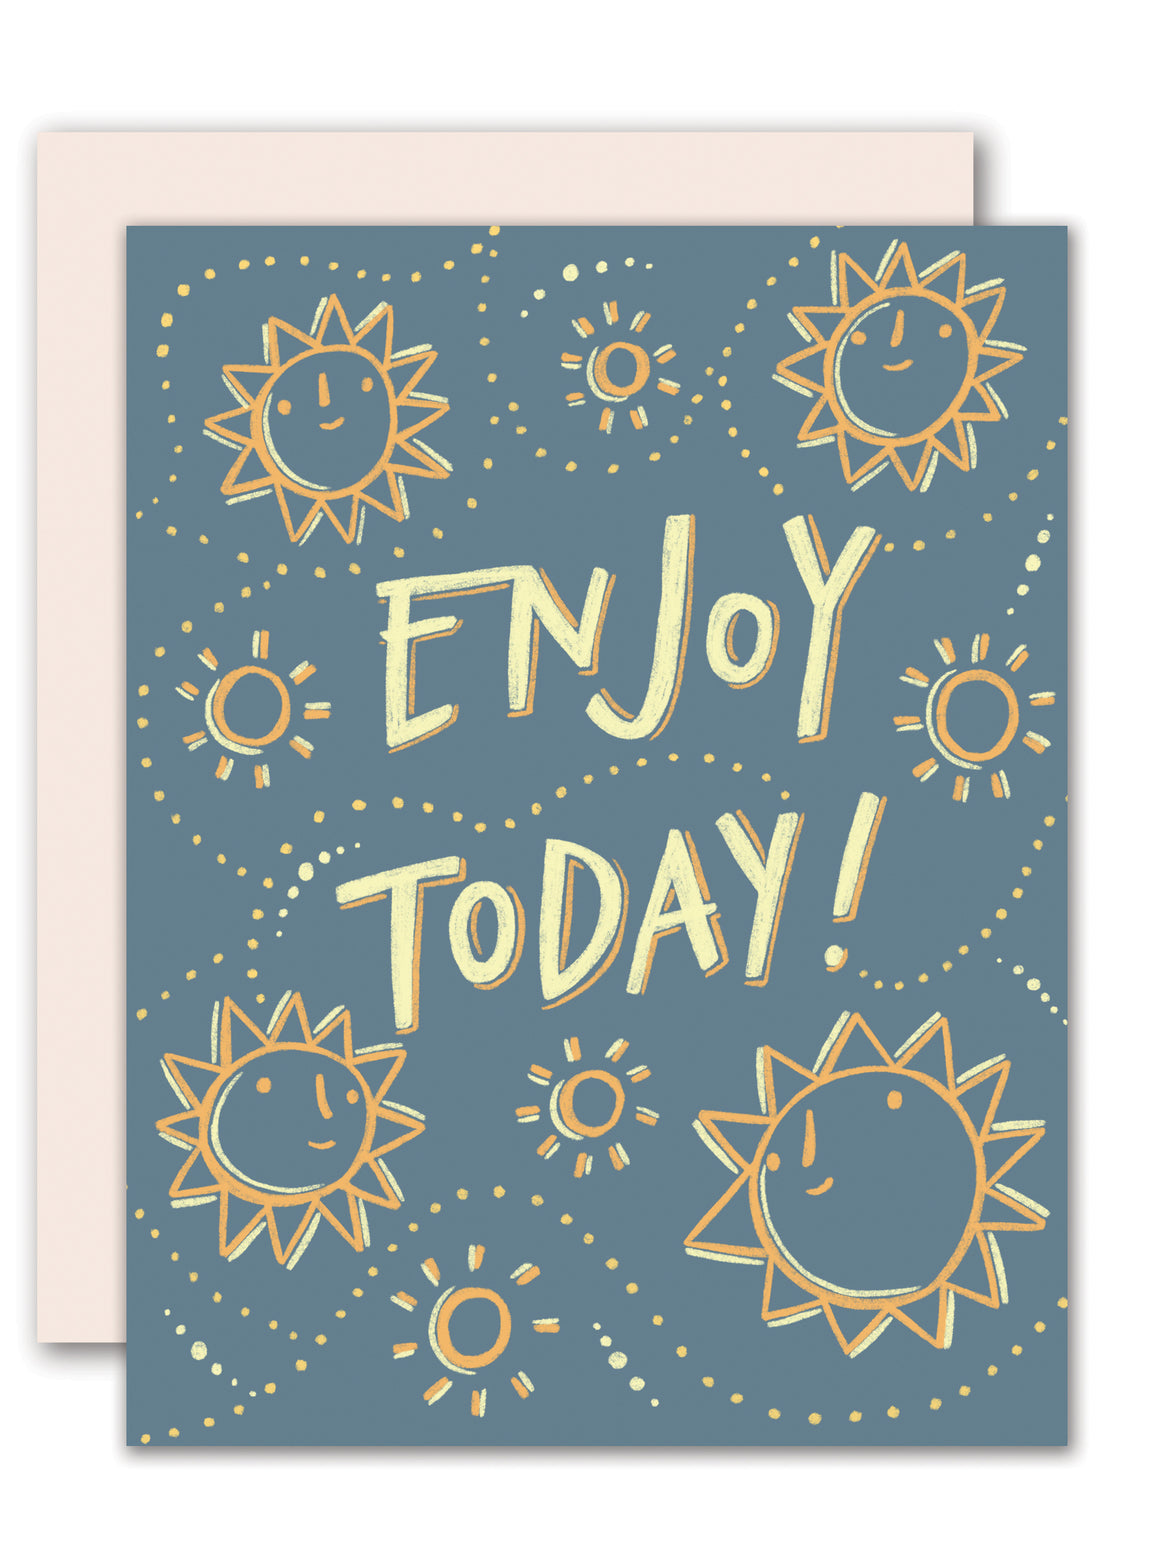 Enjoy Today - encouragement card